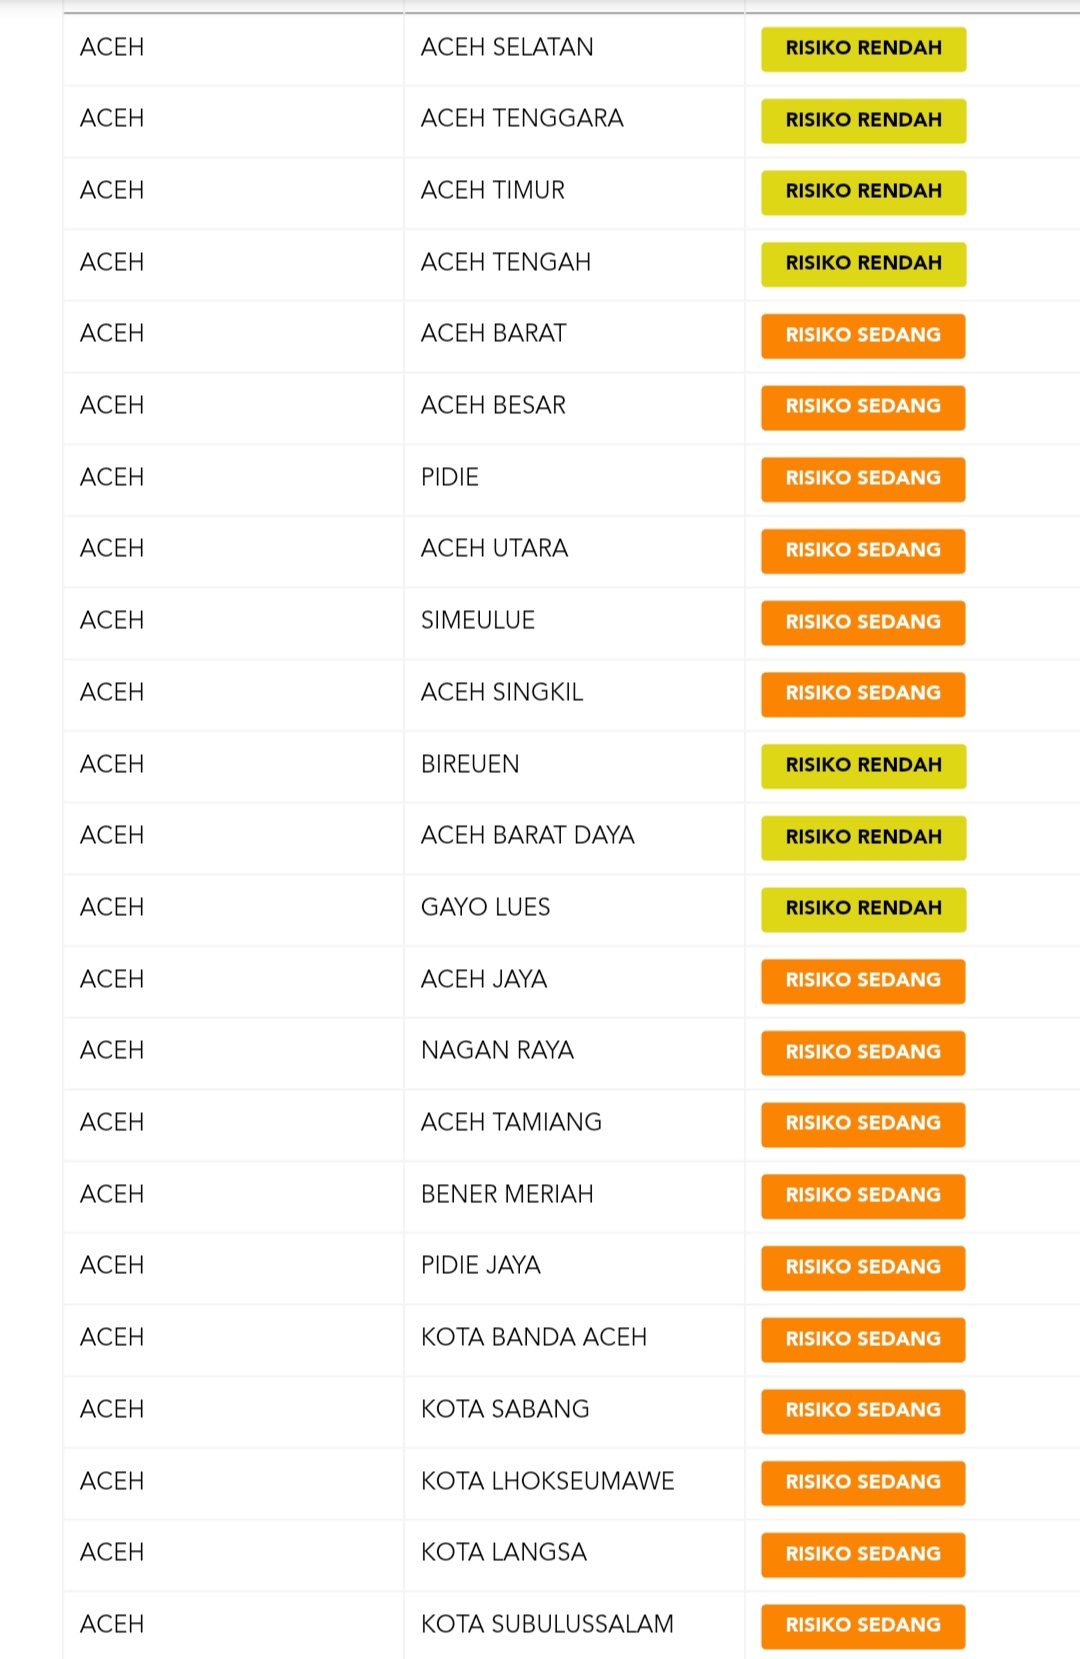 Update Peta Zonasi Risiko Covid-19 di Aceh: 7 Zona Kuning, 16 Zona Oranye